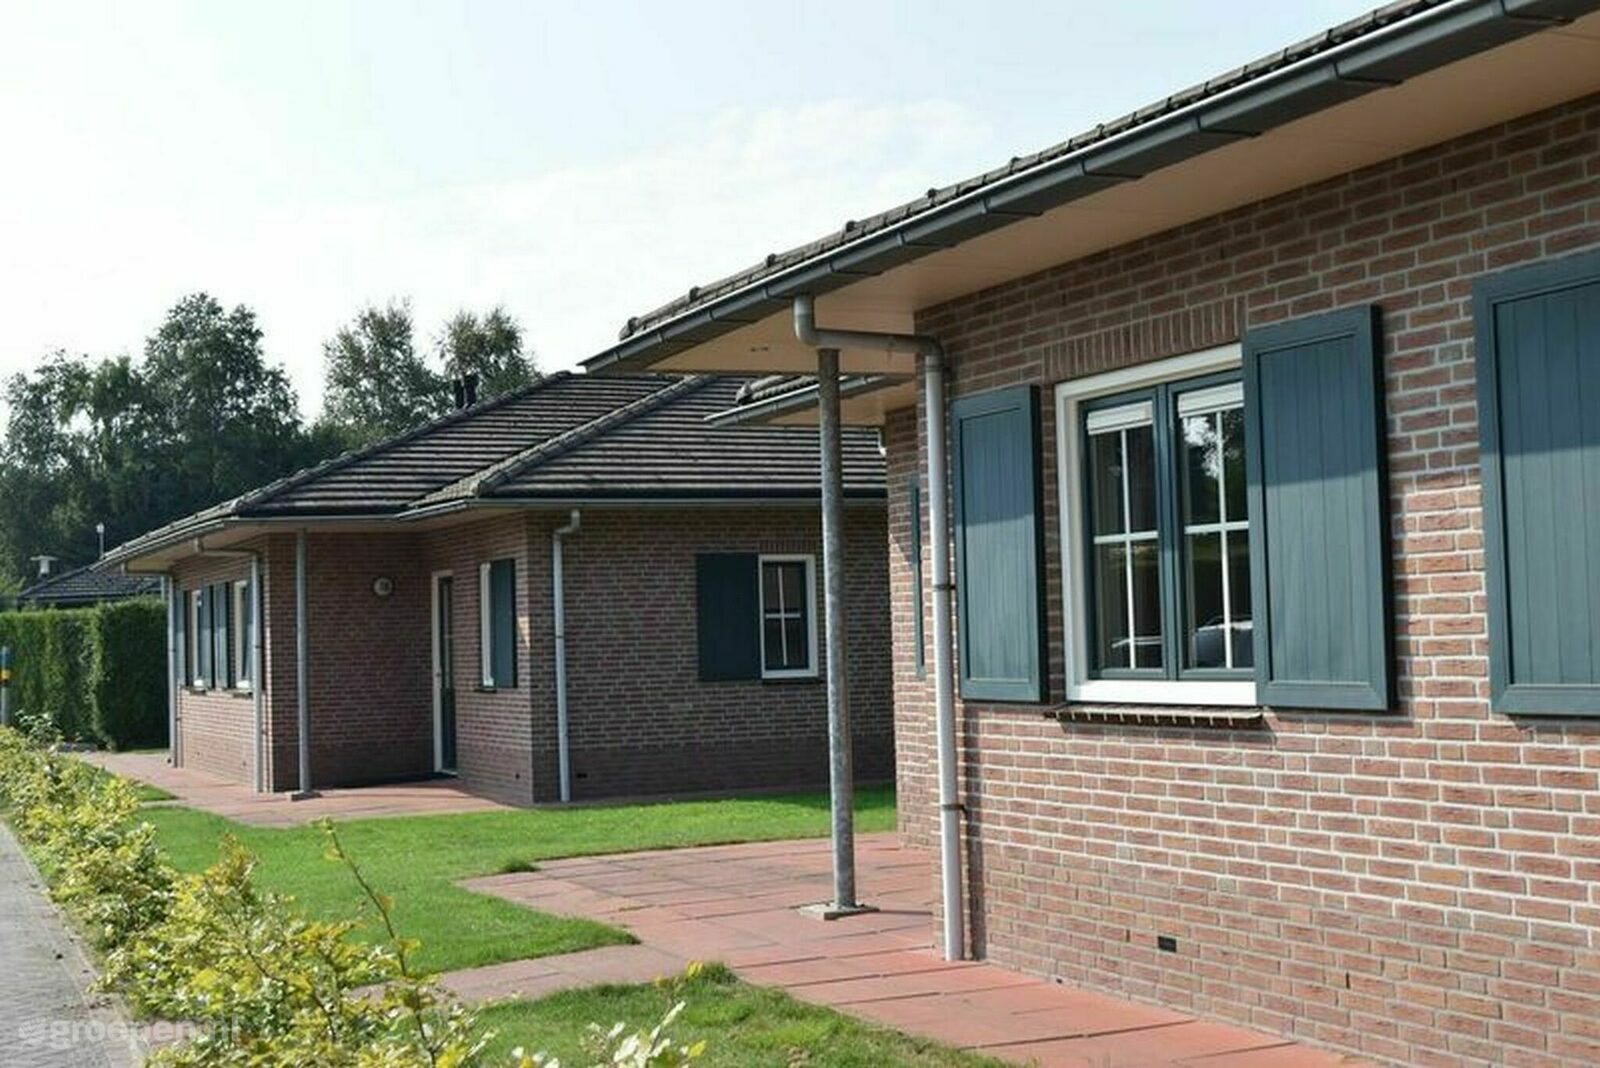 Groepsaccommodatie Voorthuizen in Voorthuizen - Gelderland, Nederland foto 8593755